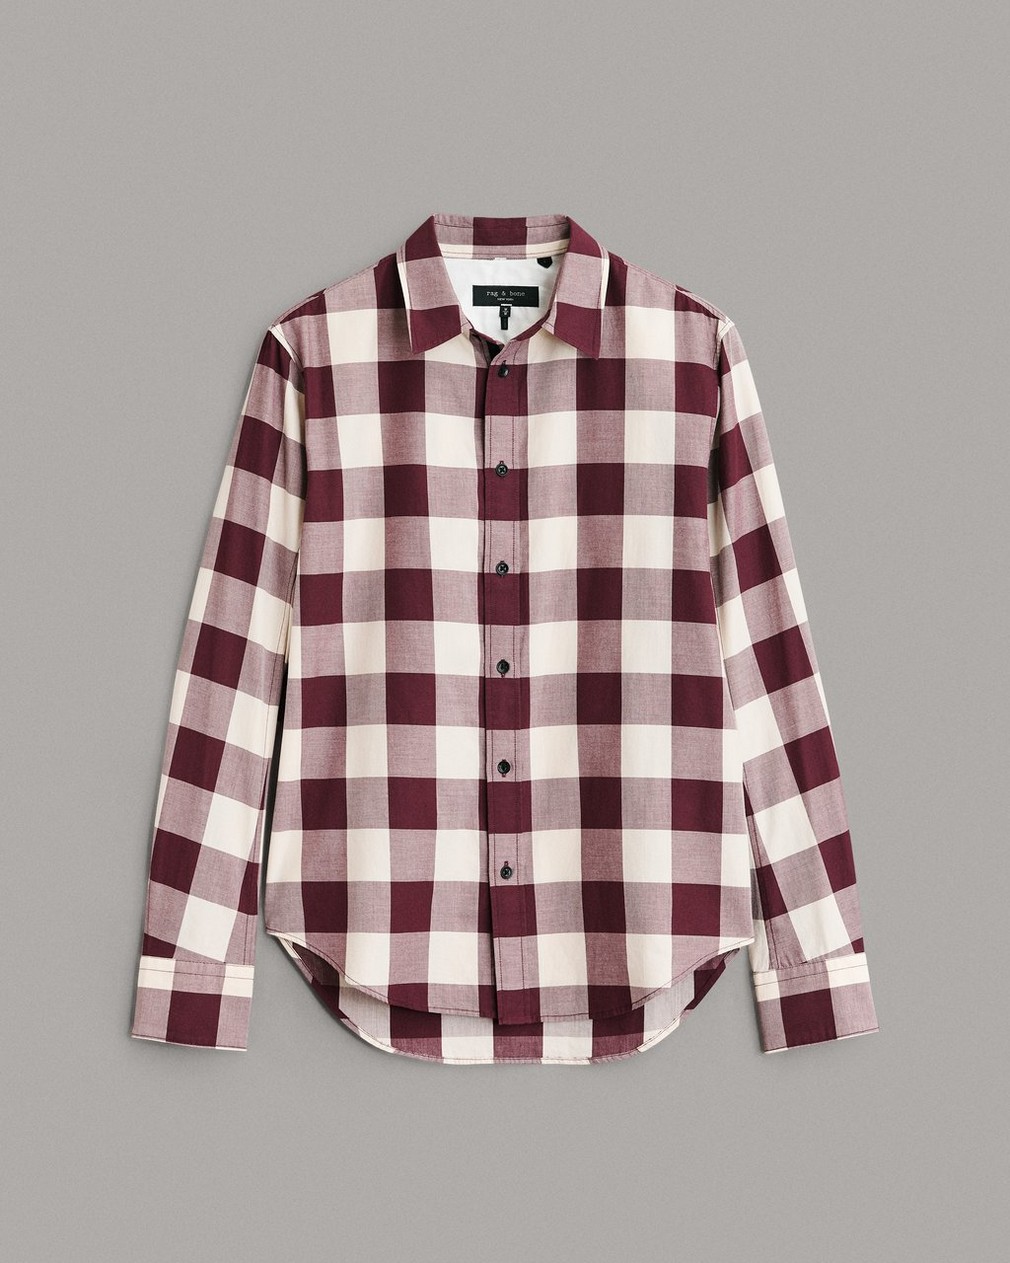 Engineered Check Cotton Shirt